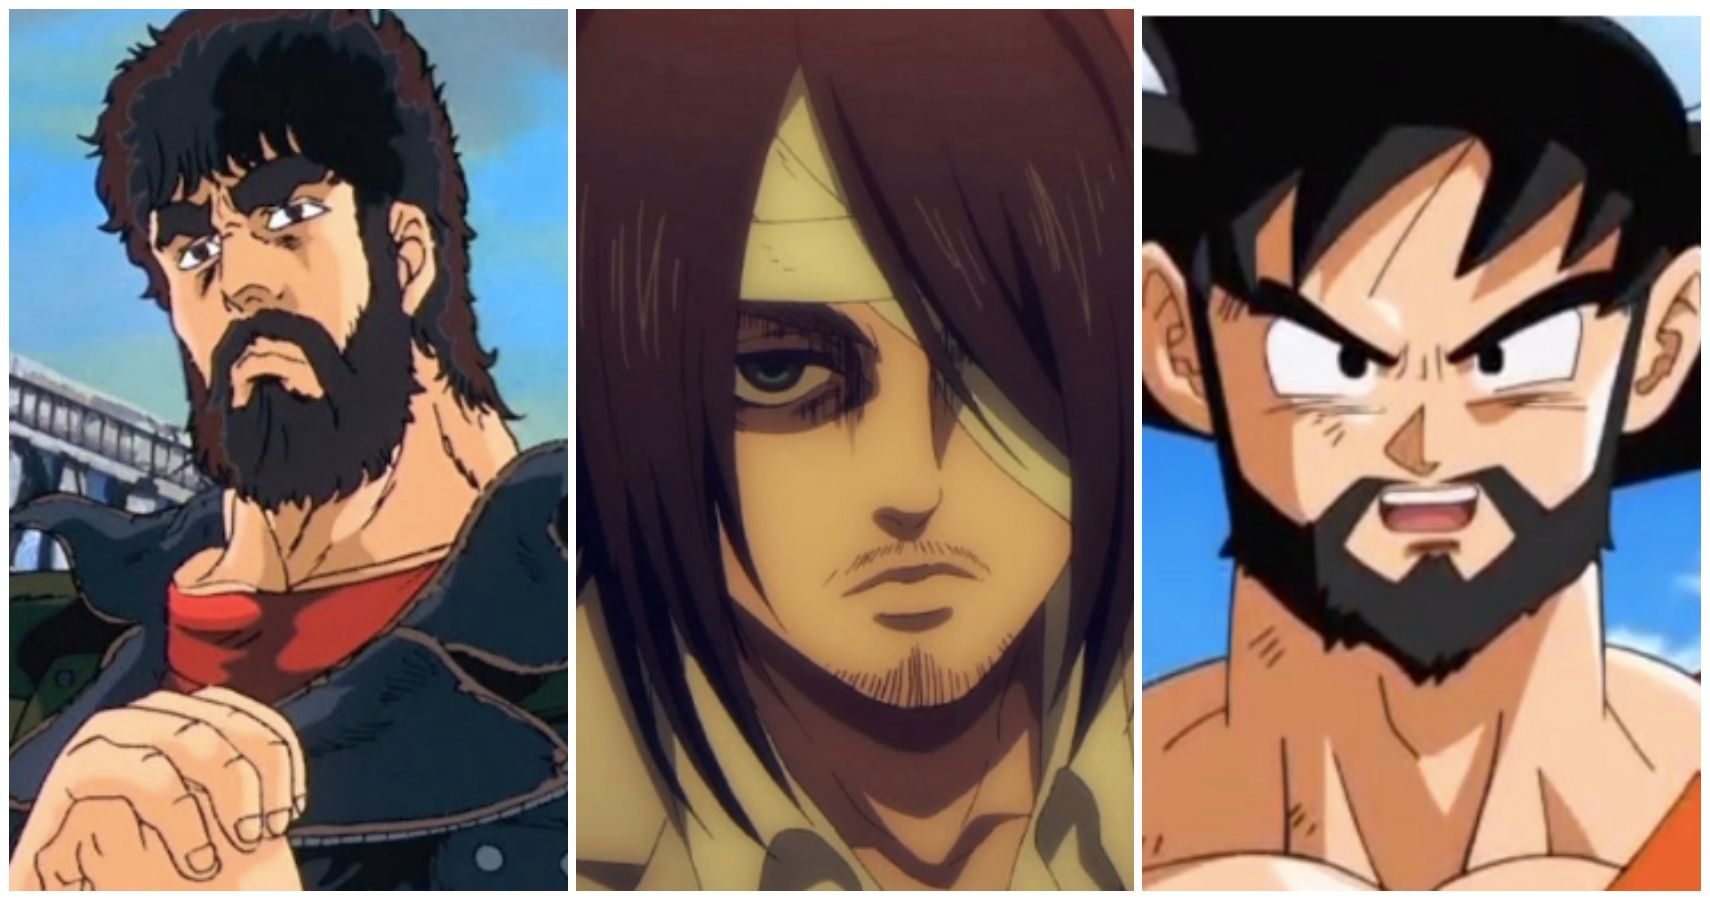 Anime is lacking attractive bearded men (50 - ) - Forums - MyAnimeList.net